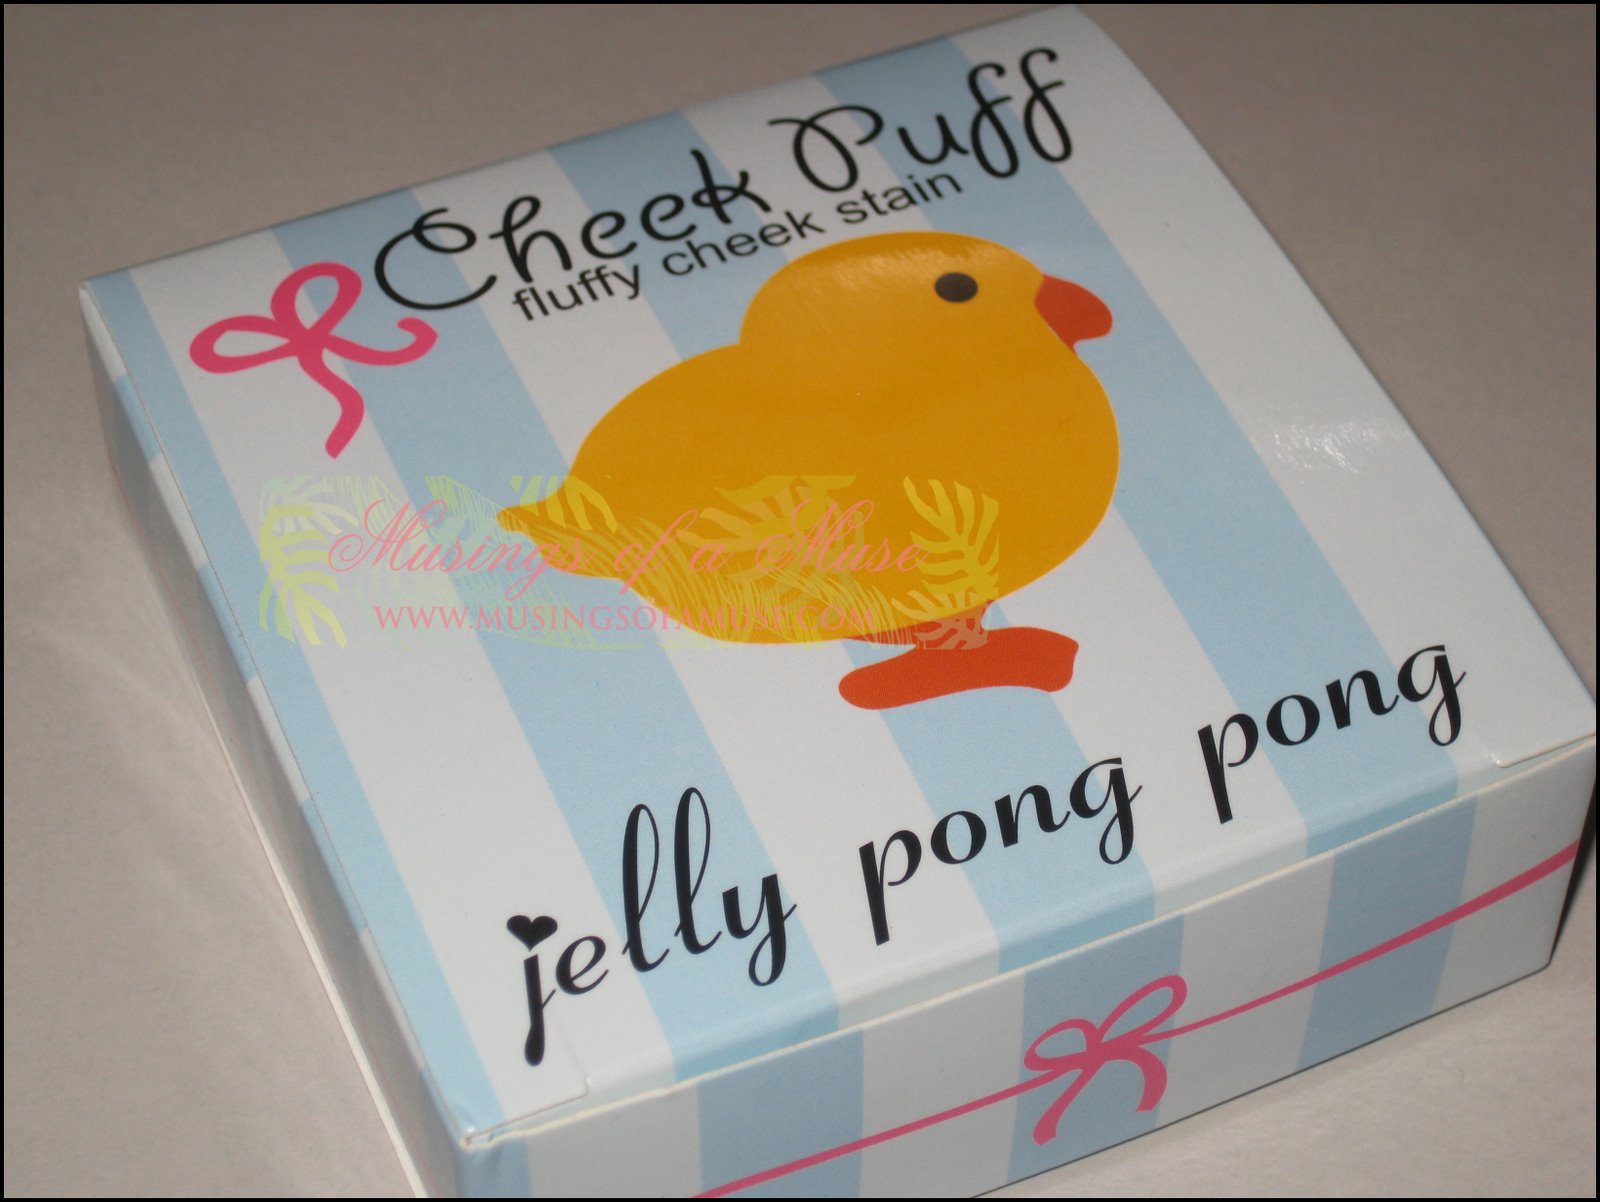 [Jelly+Pong+Pong+Cheek+Puff+Fluffy+Cheek+Stain+001.jpg]